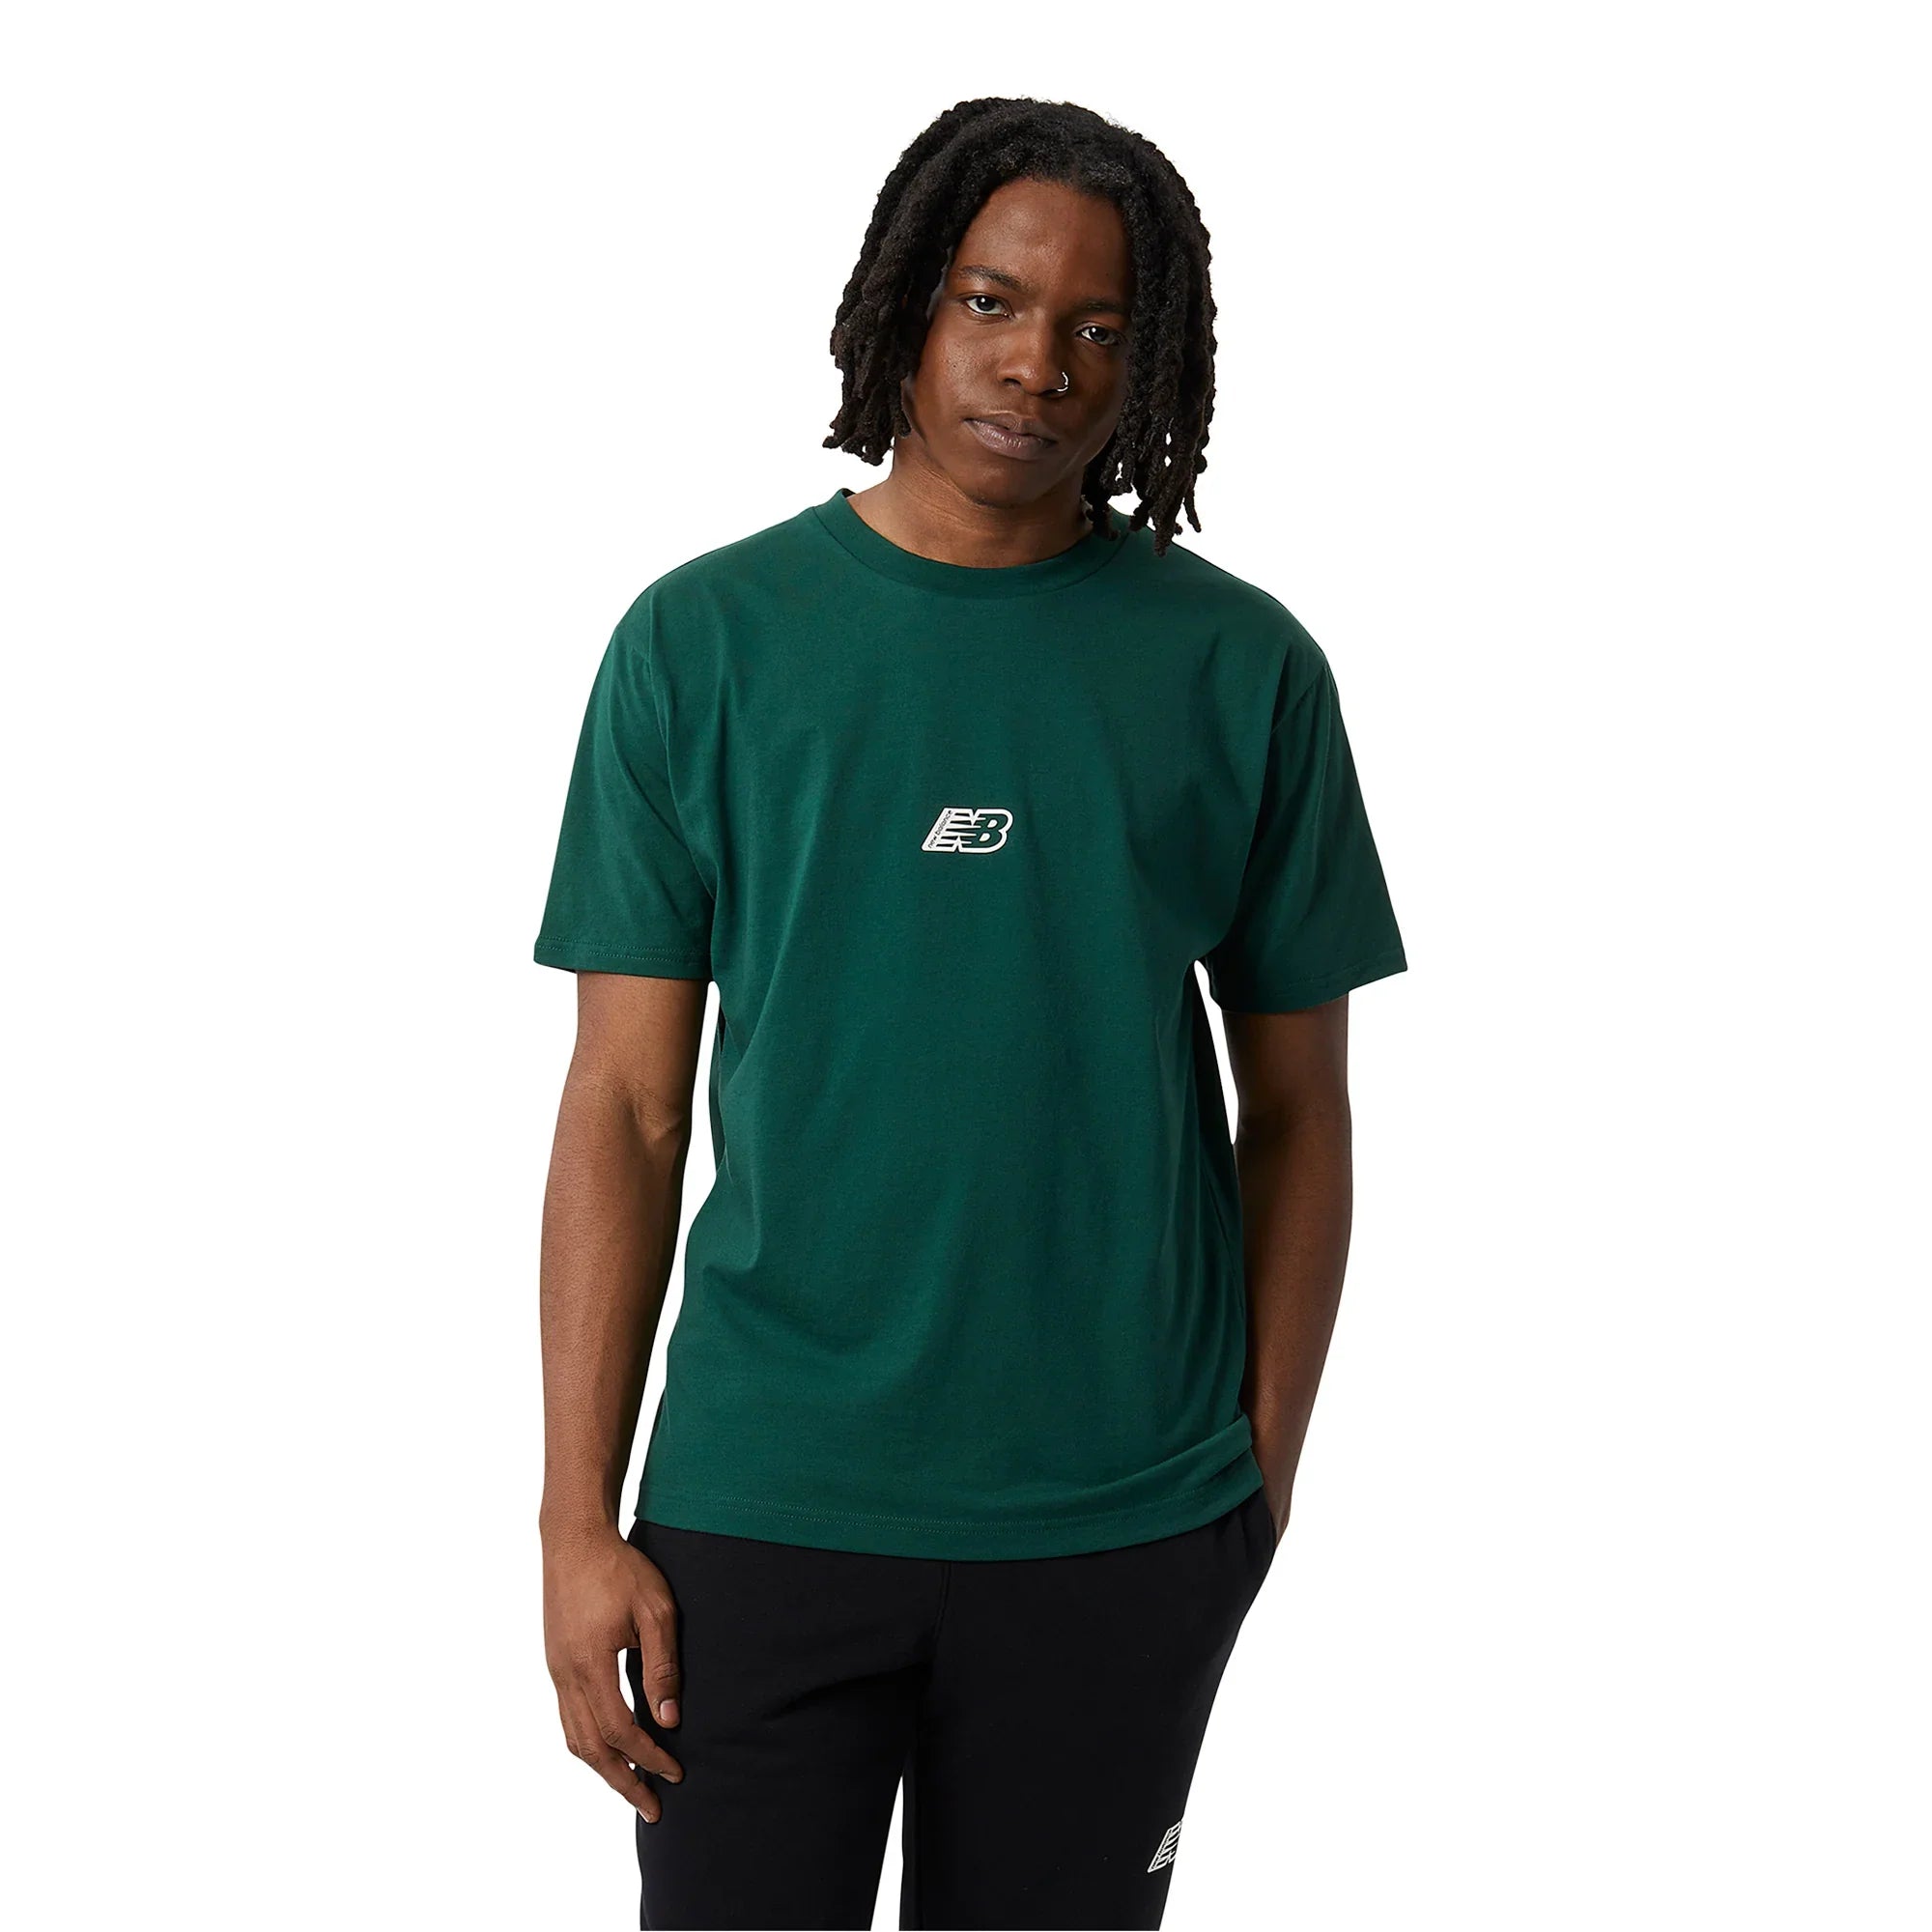 NB Essentials Graphic Shirt Sleeve Top - Men